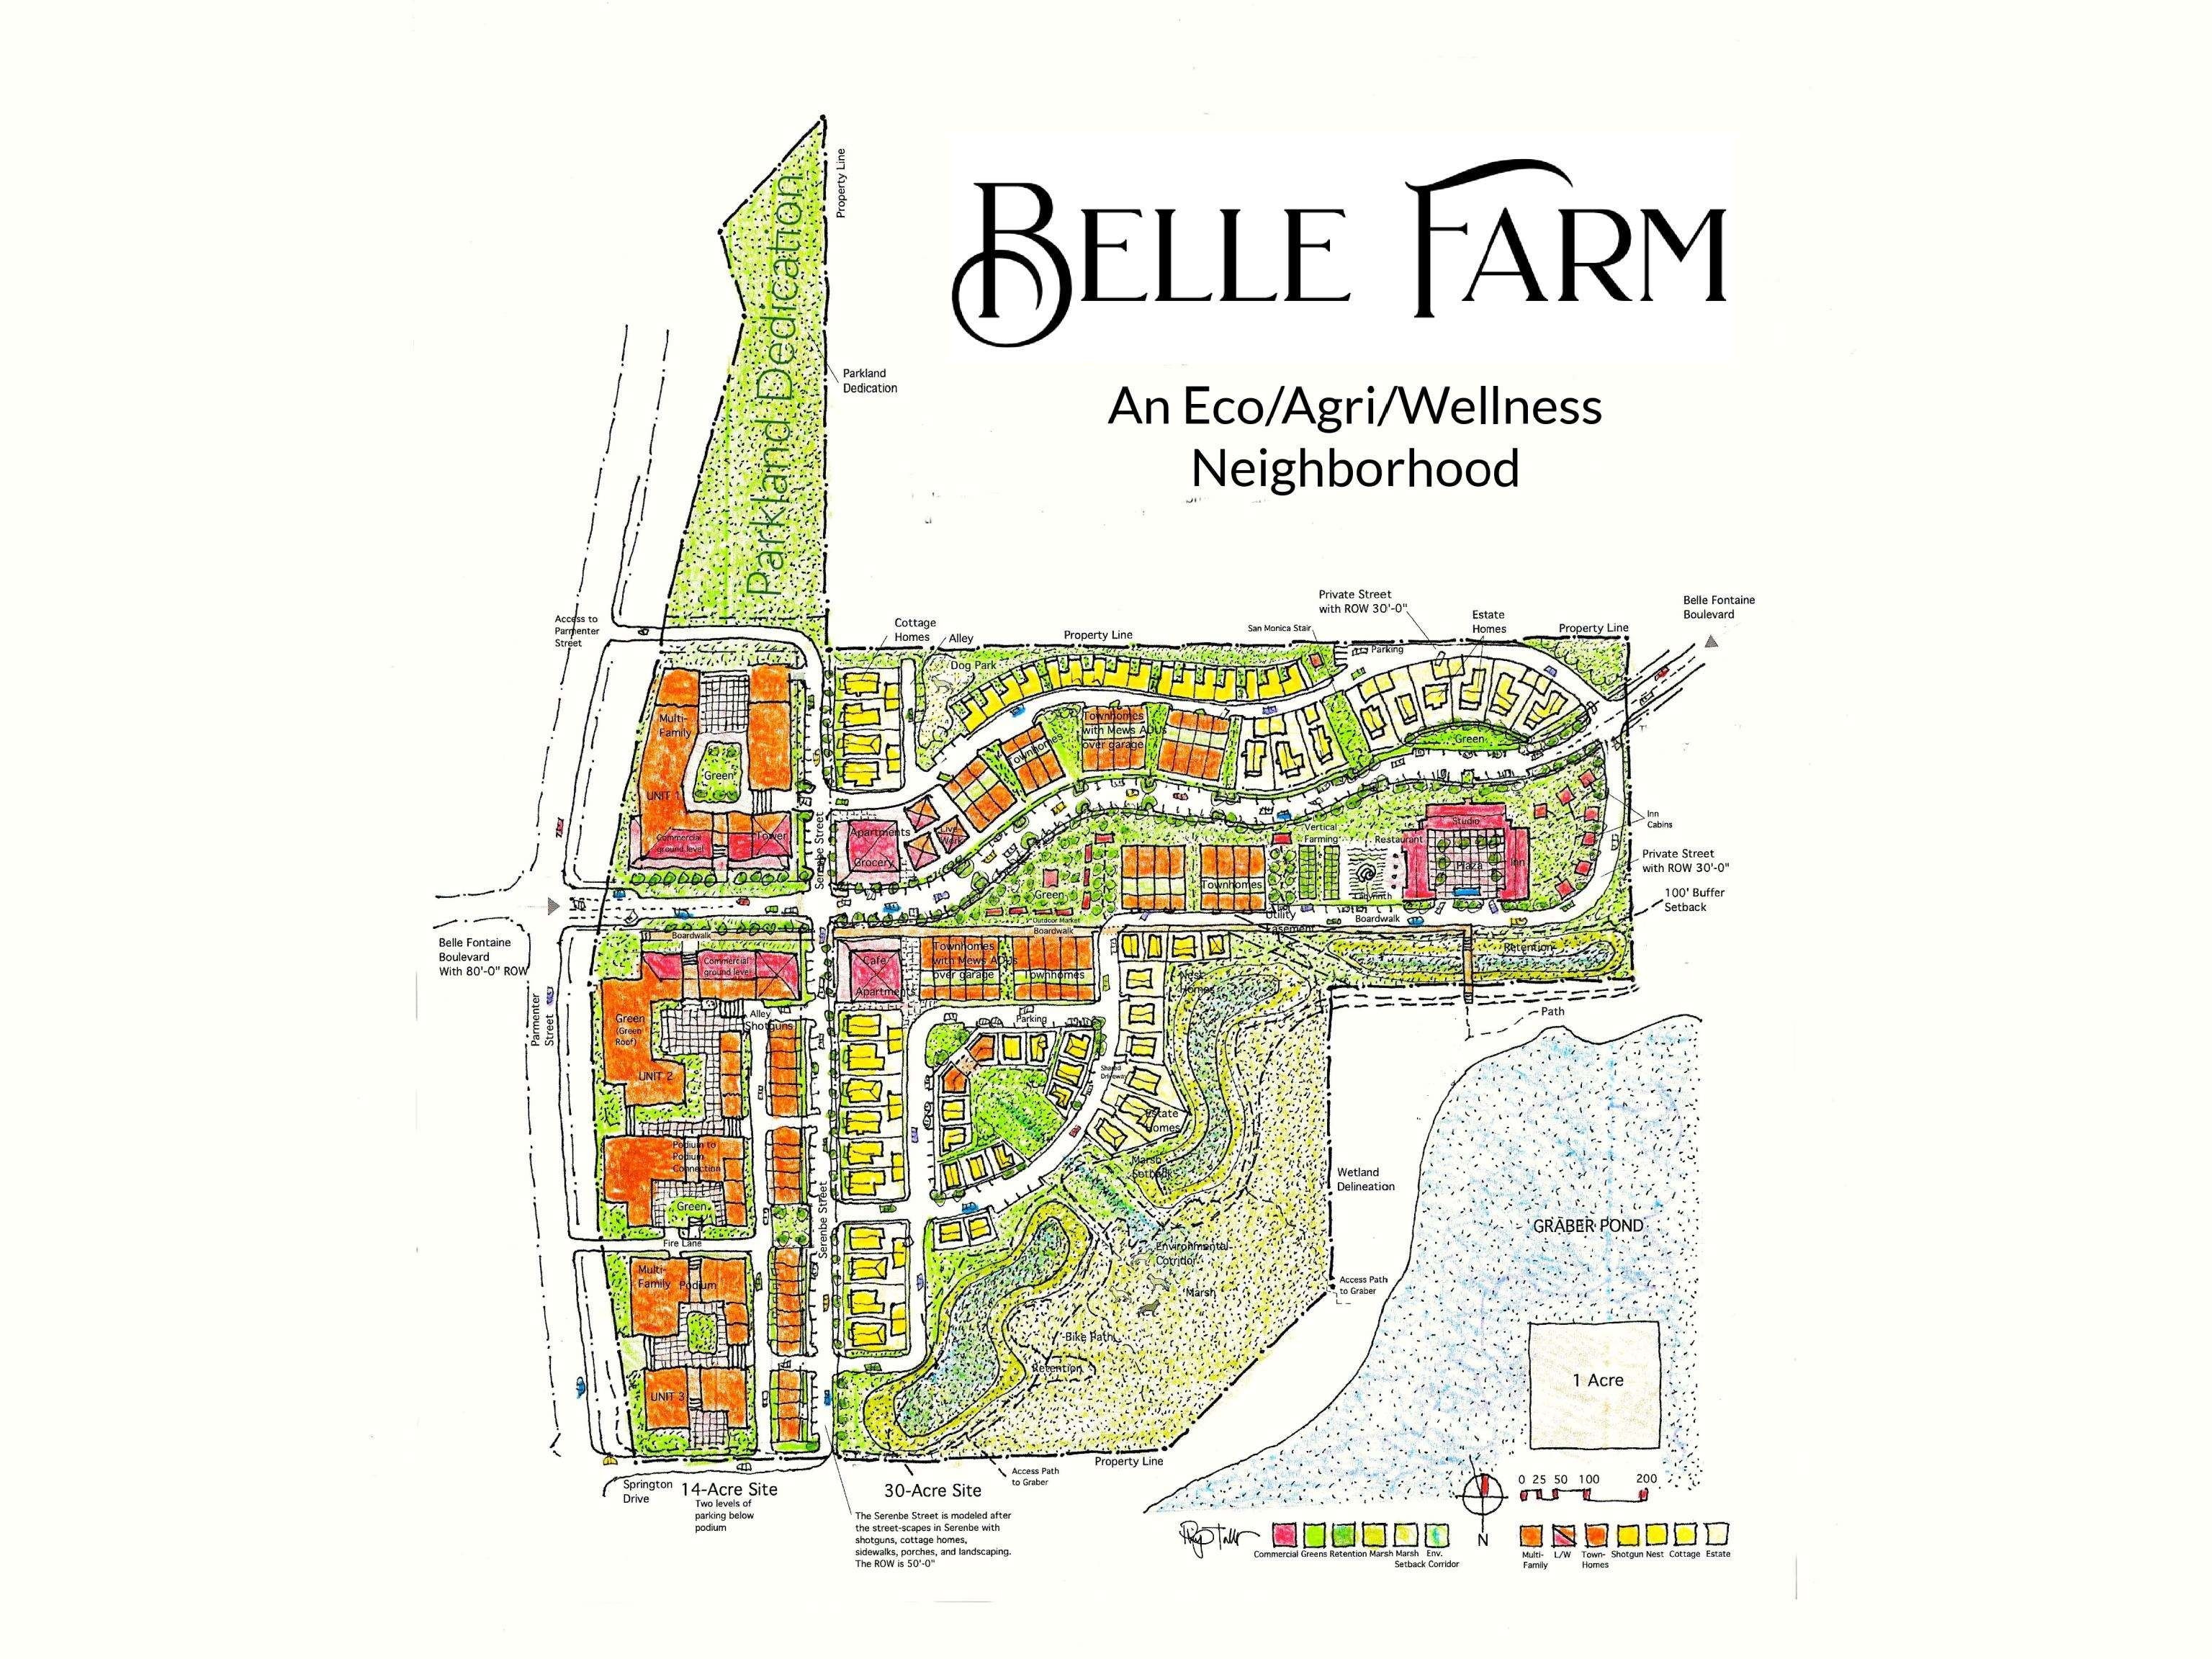 2. Lot 40 Belle Farm